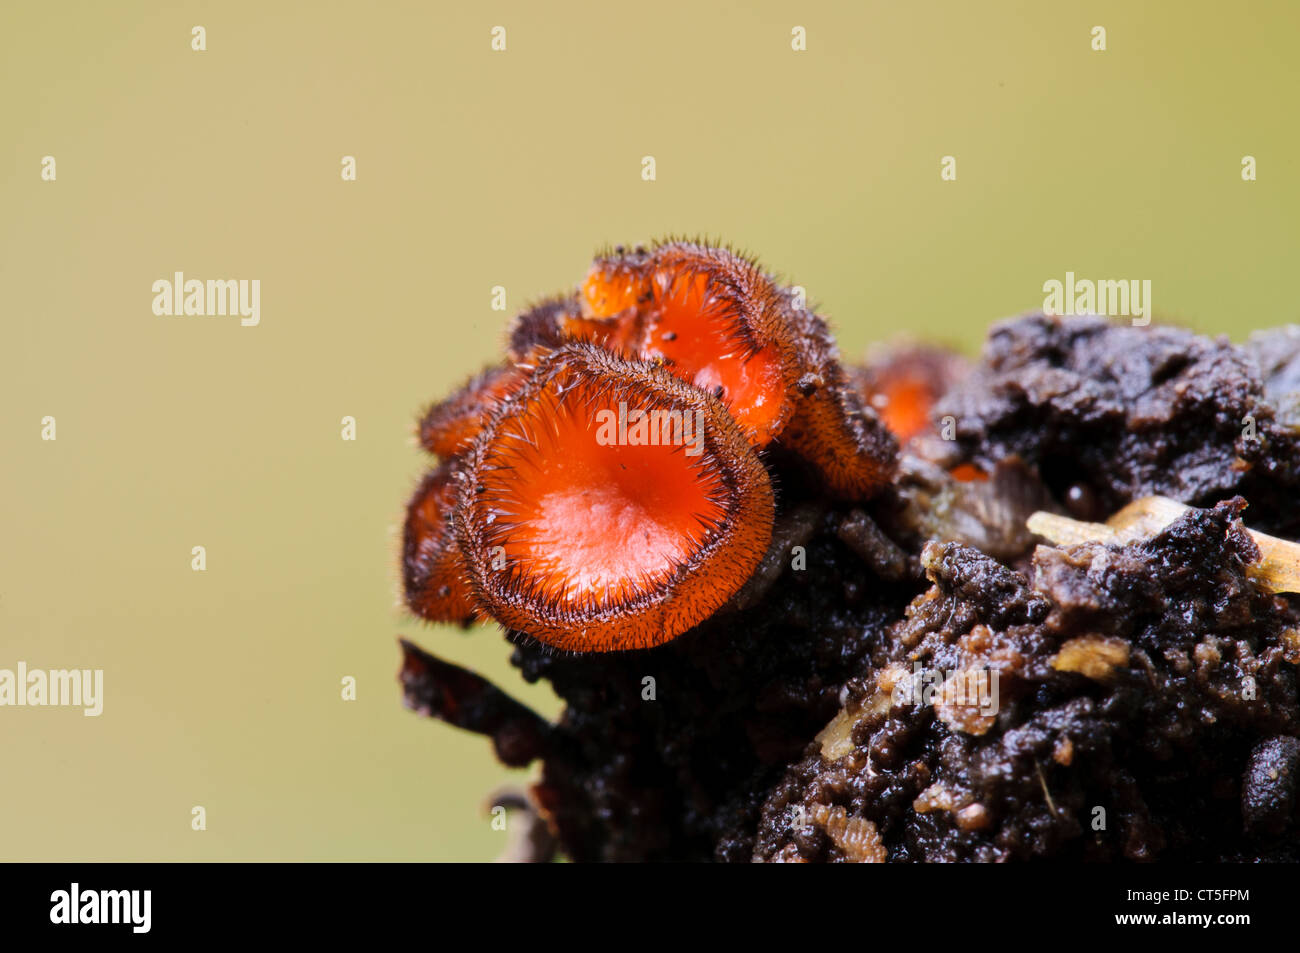 Common eyelash fungus (Scutellinia scutellata) growing in Clumber Park, Nottinghamshire. October. Stock Photo